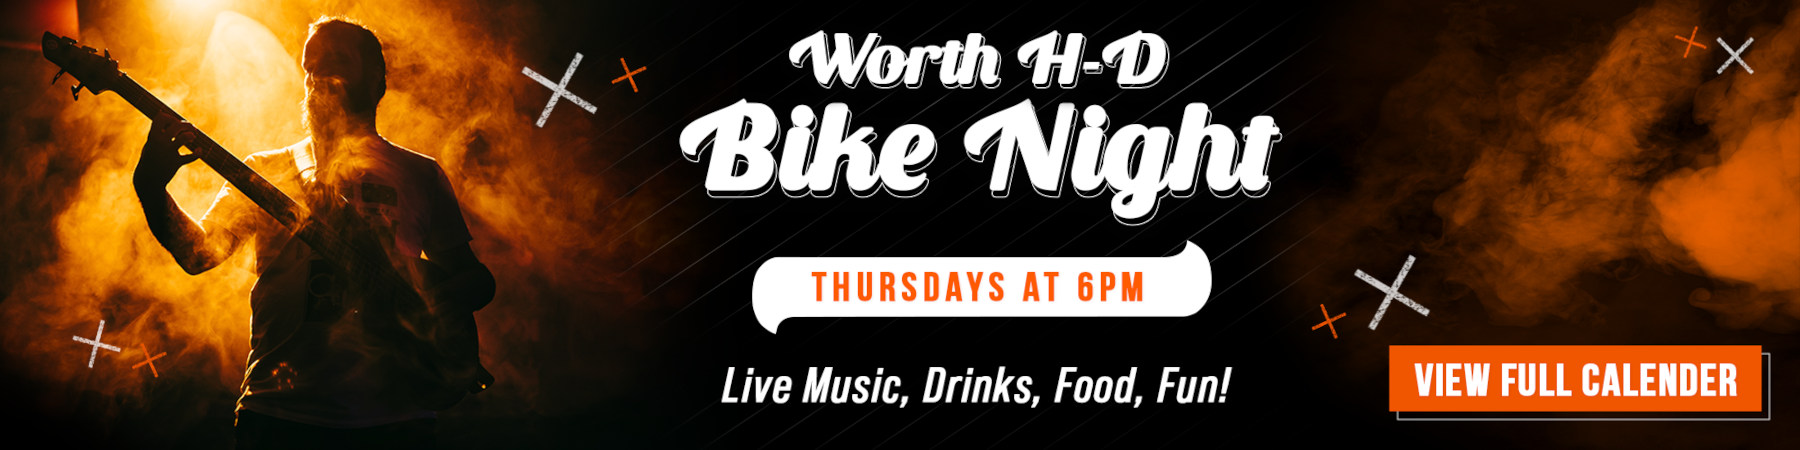 Bike Night Worth Harley-Davidson® Events